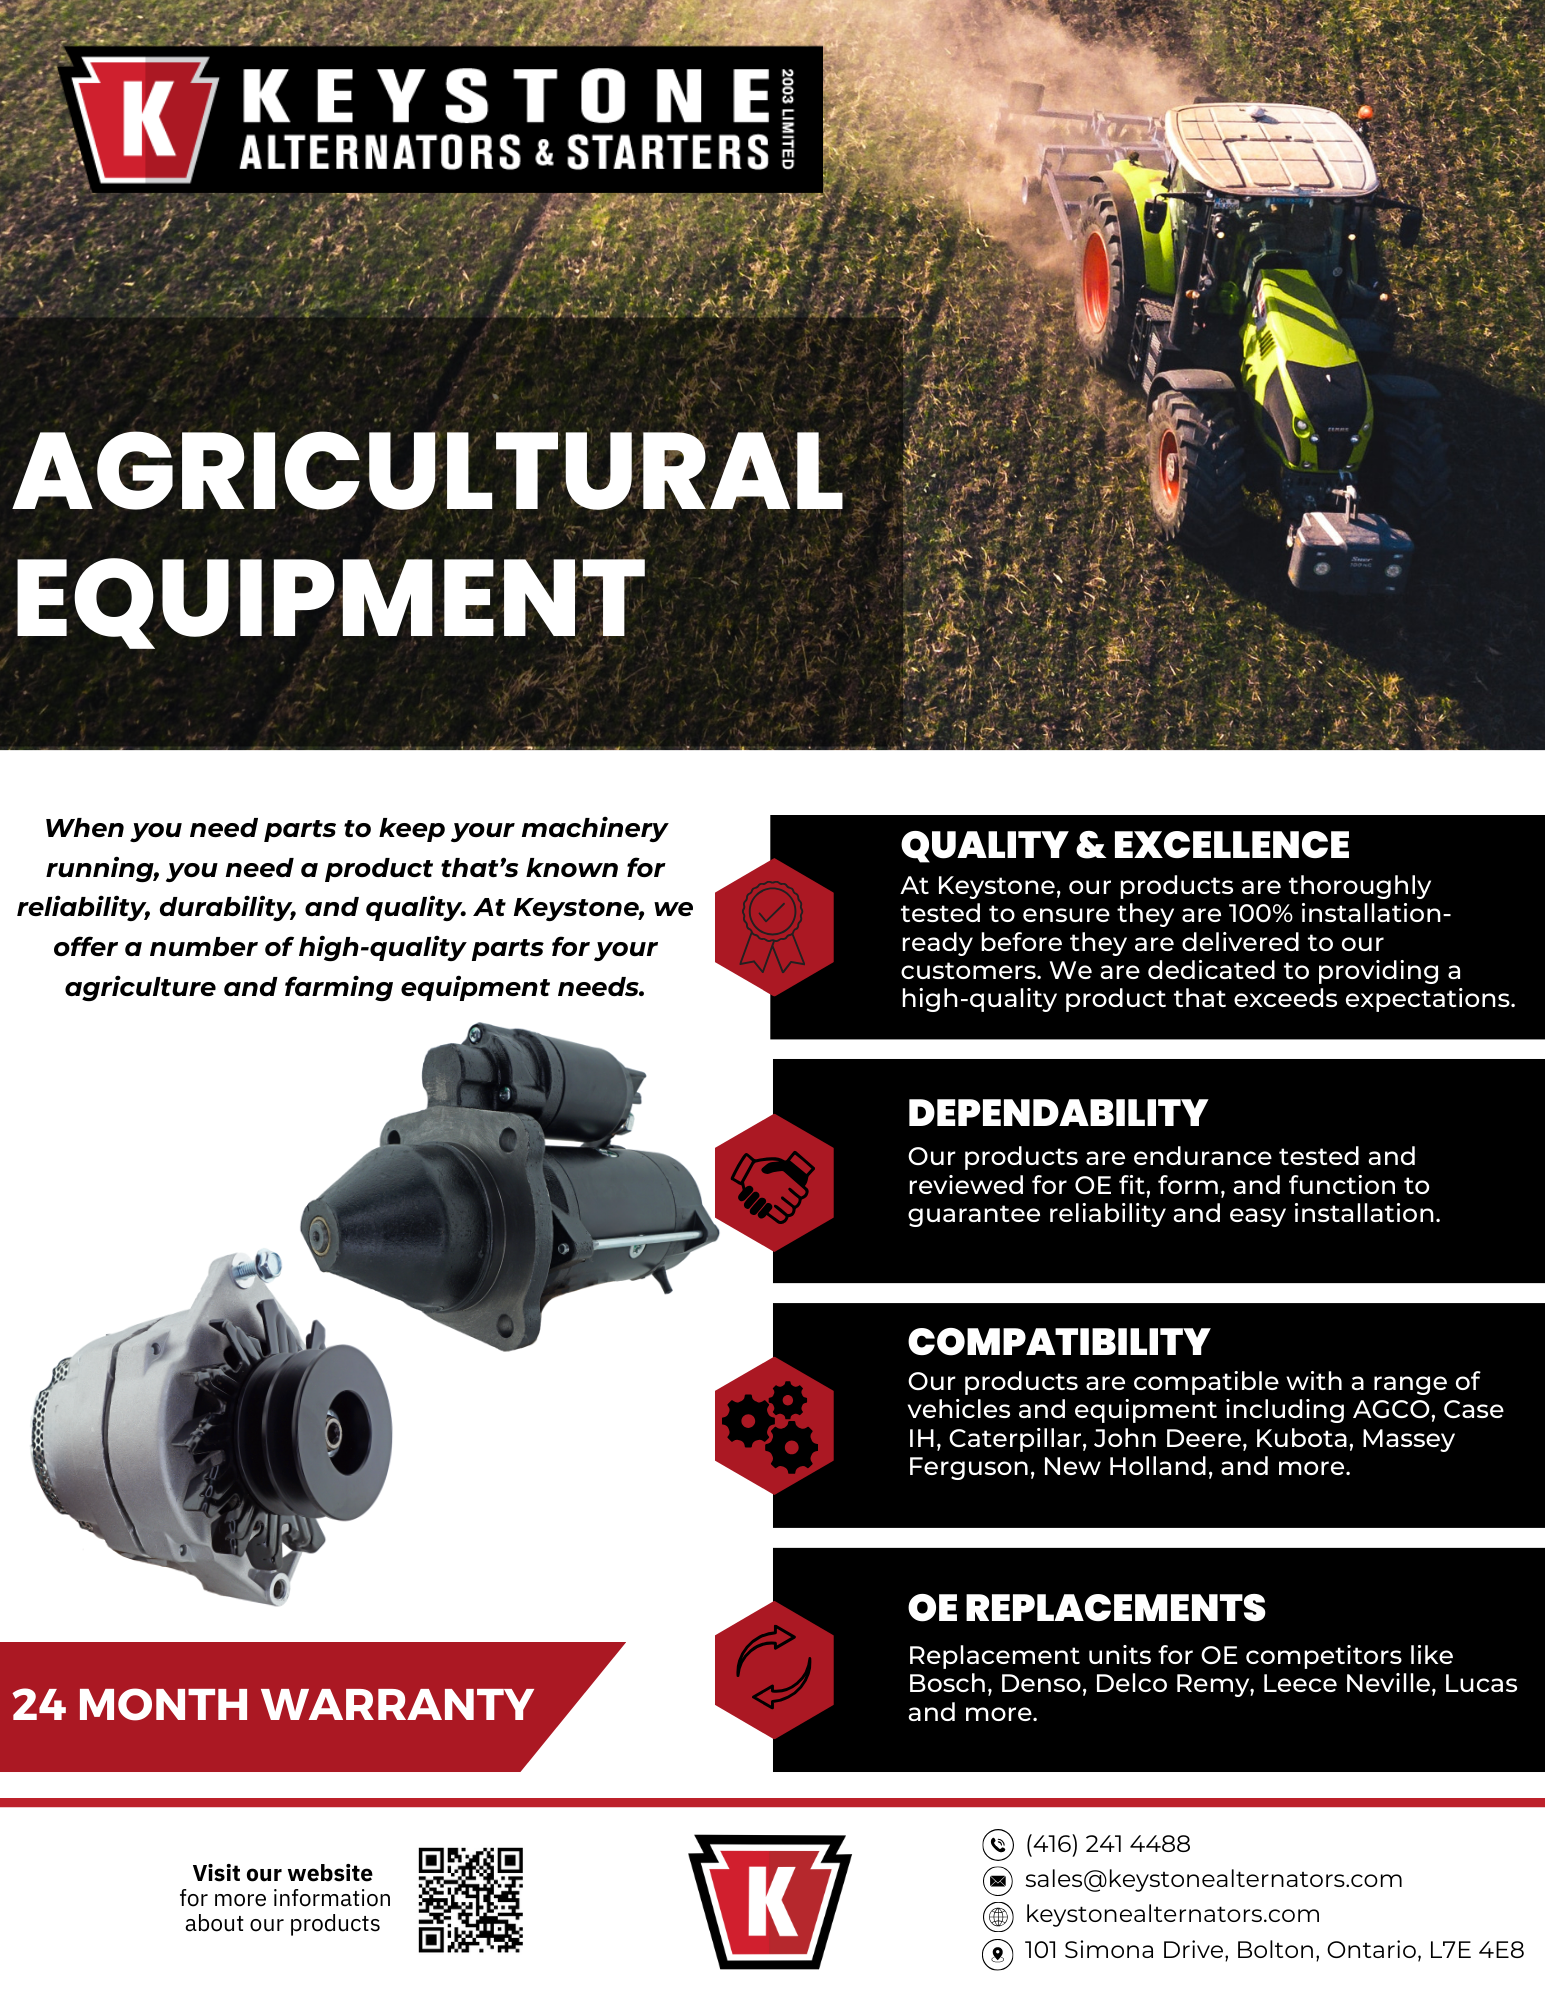 agricultural farming equipment alternators and starters keystone